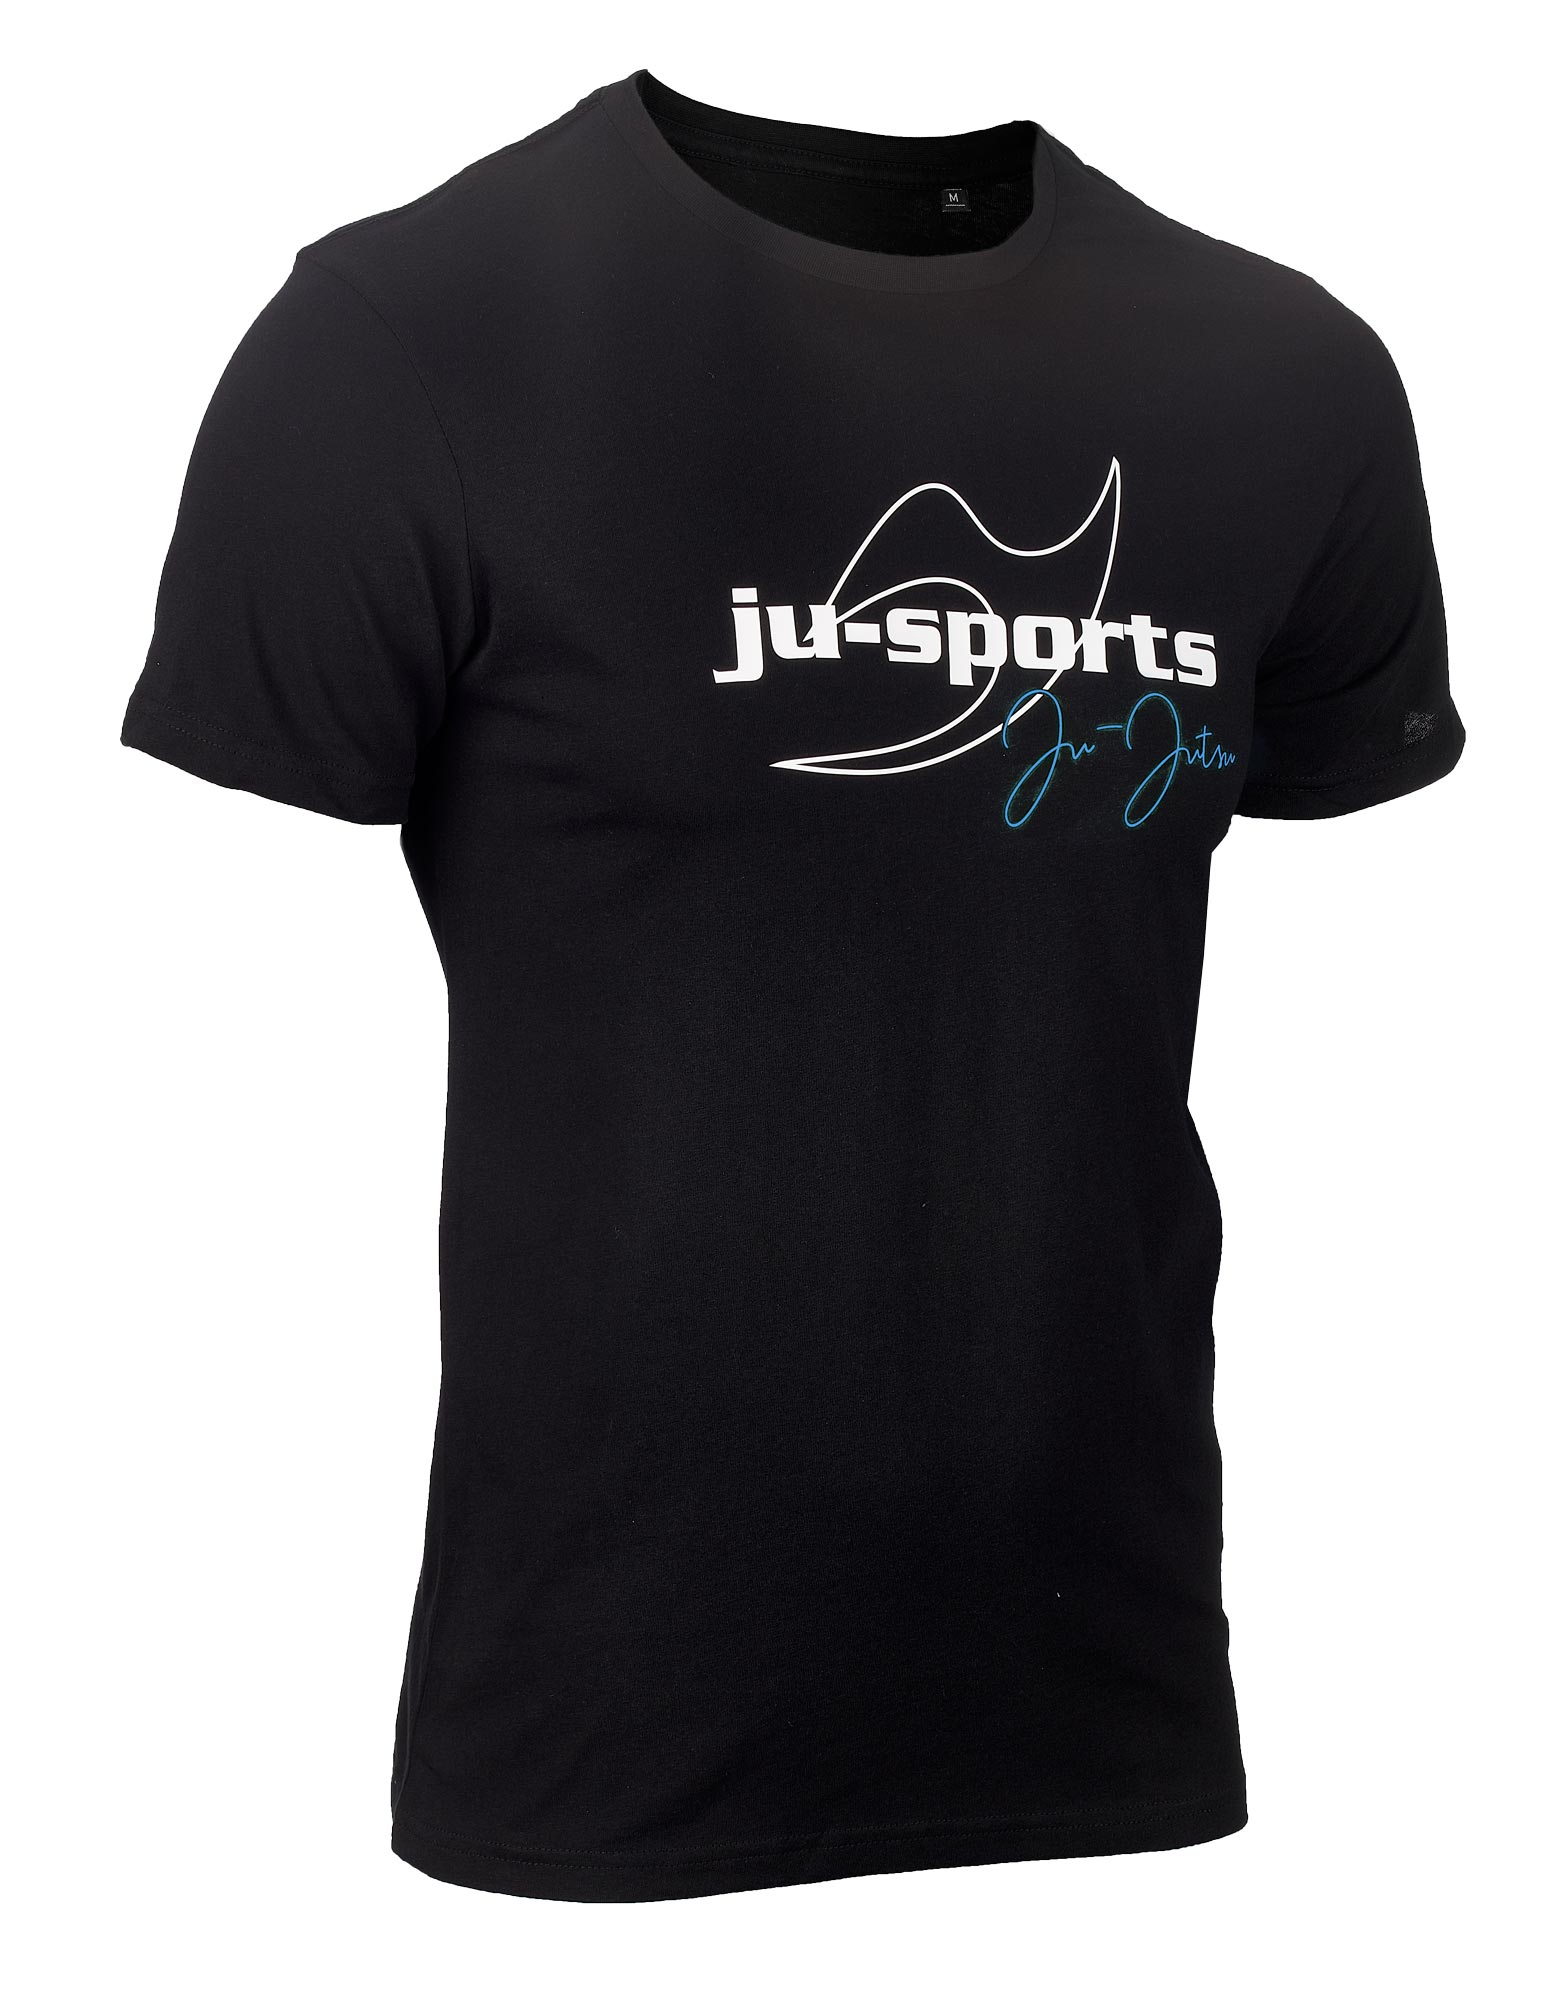 Ju-Sports Signature Line "Ju-Jutsu" T-Shirt